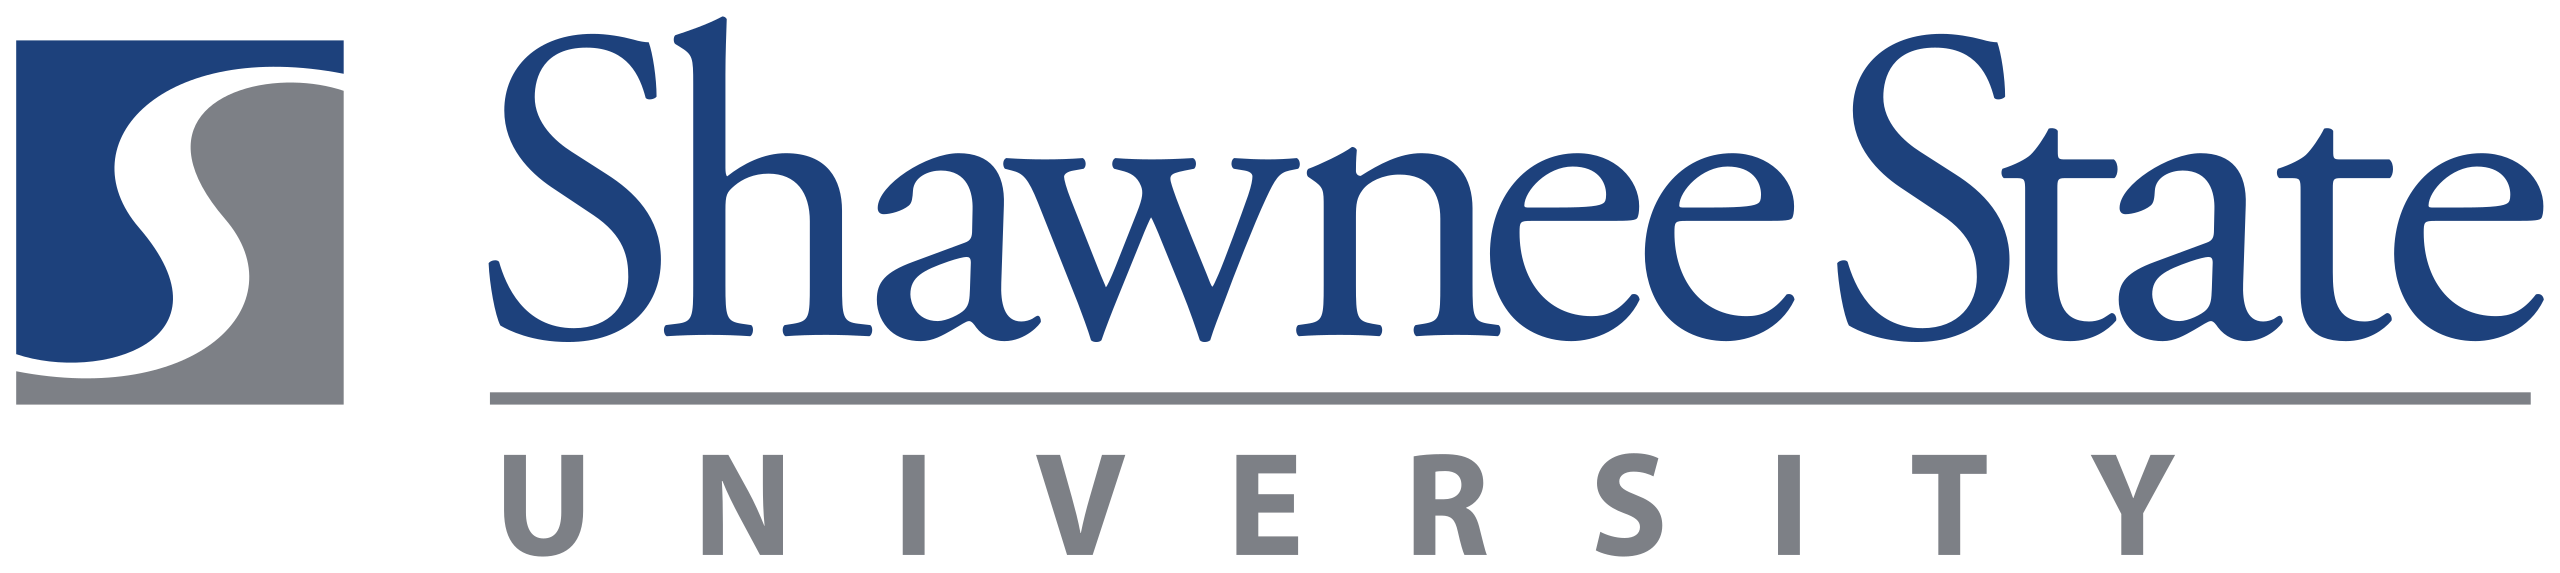 Shawnee_State_University_logo.svg